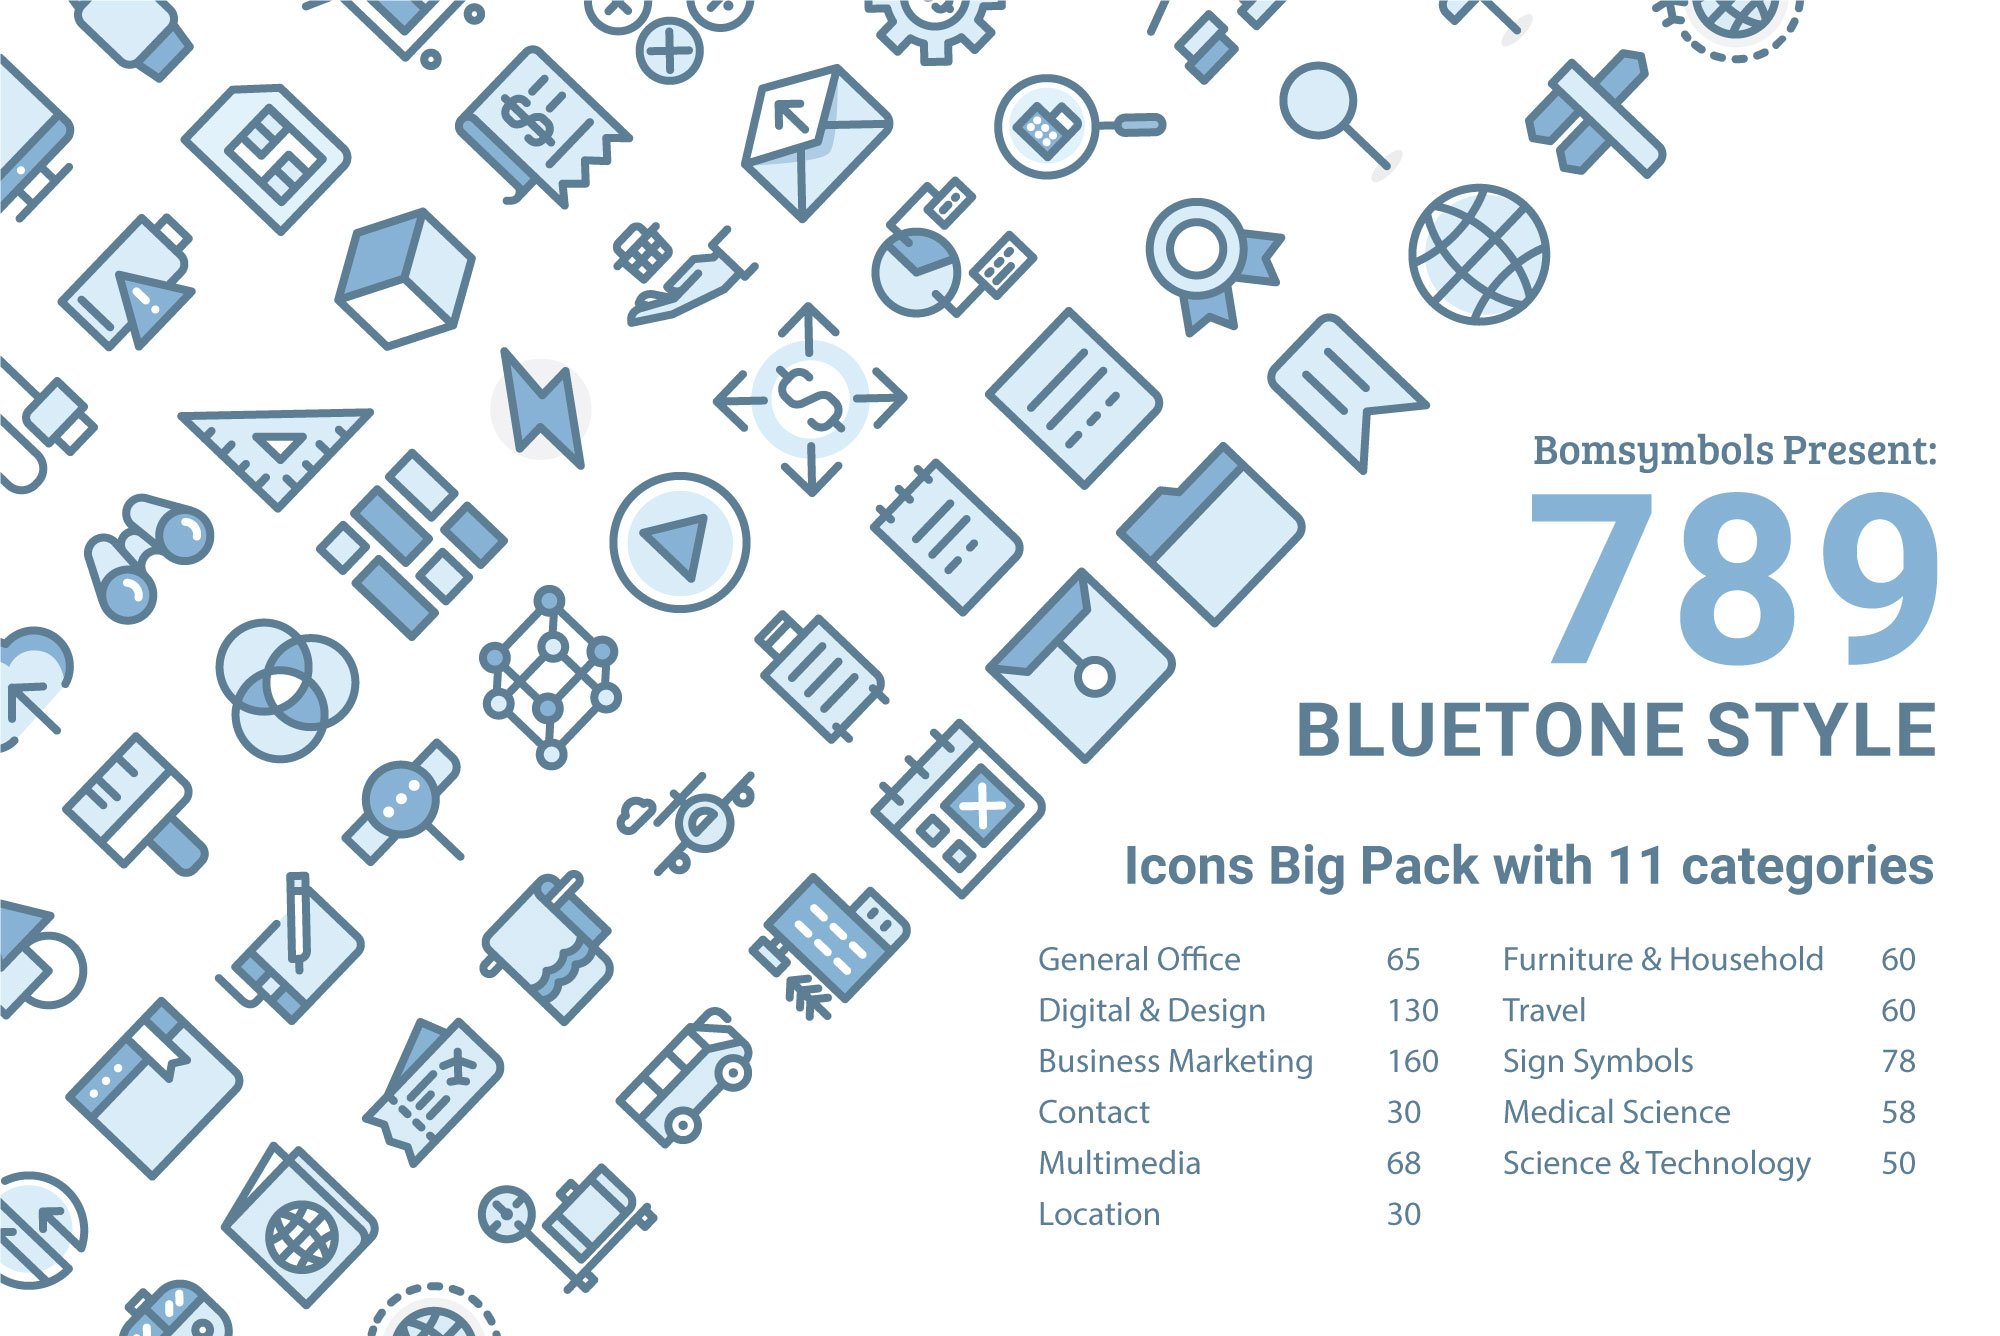 Bluetone Icons Big Pack cover image.